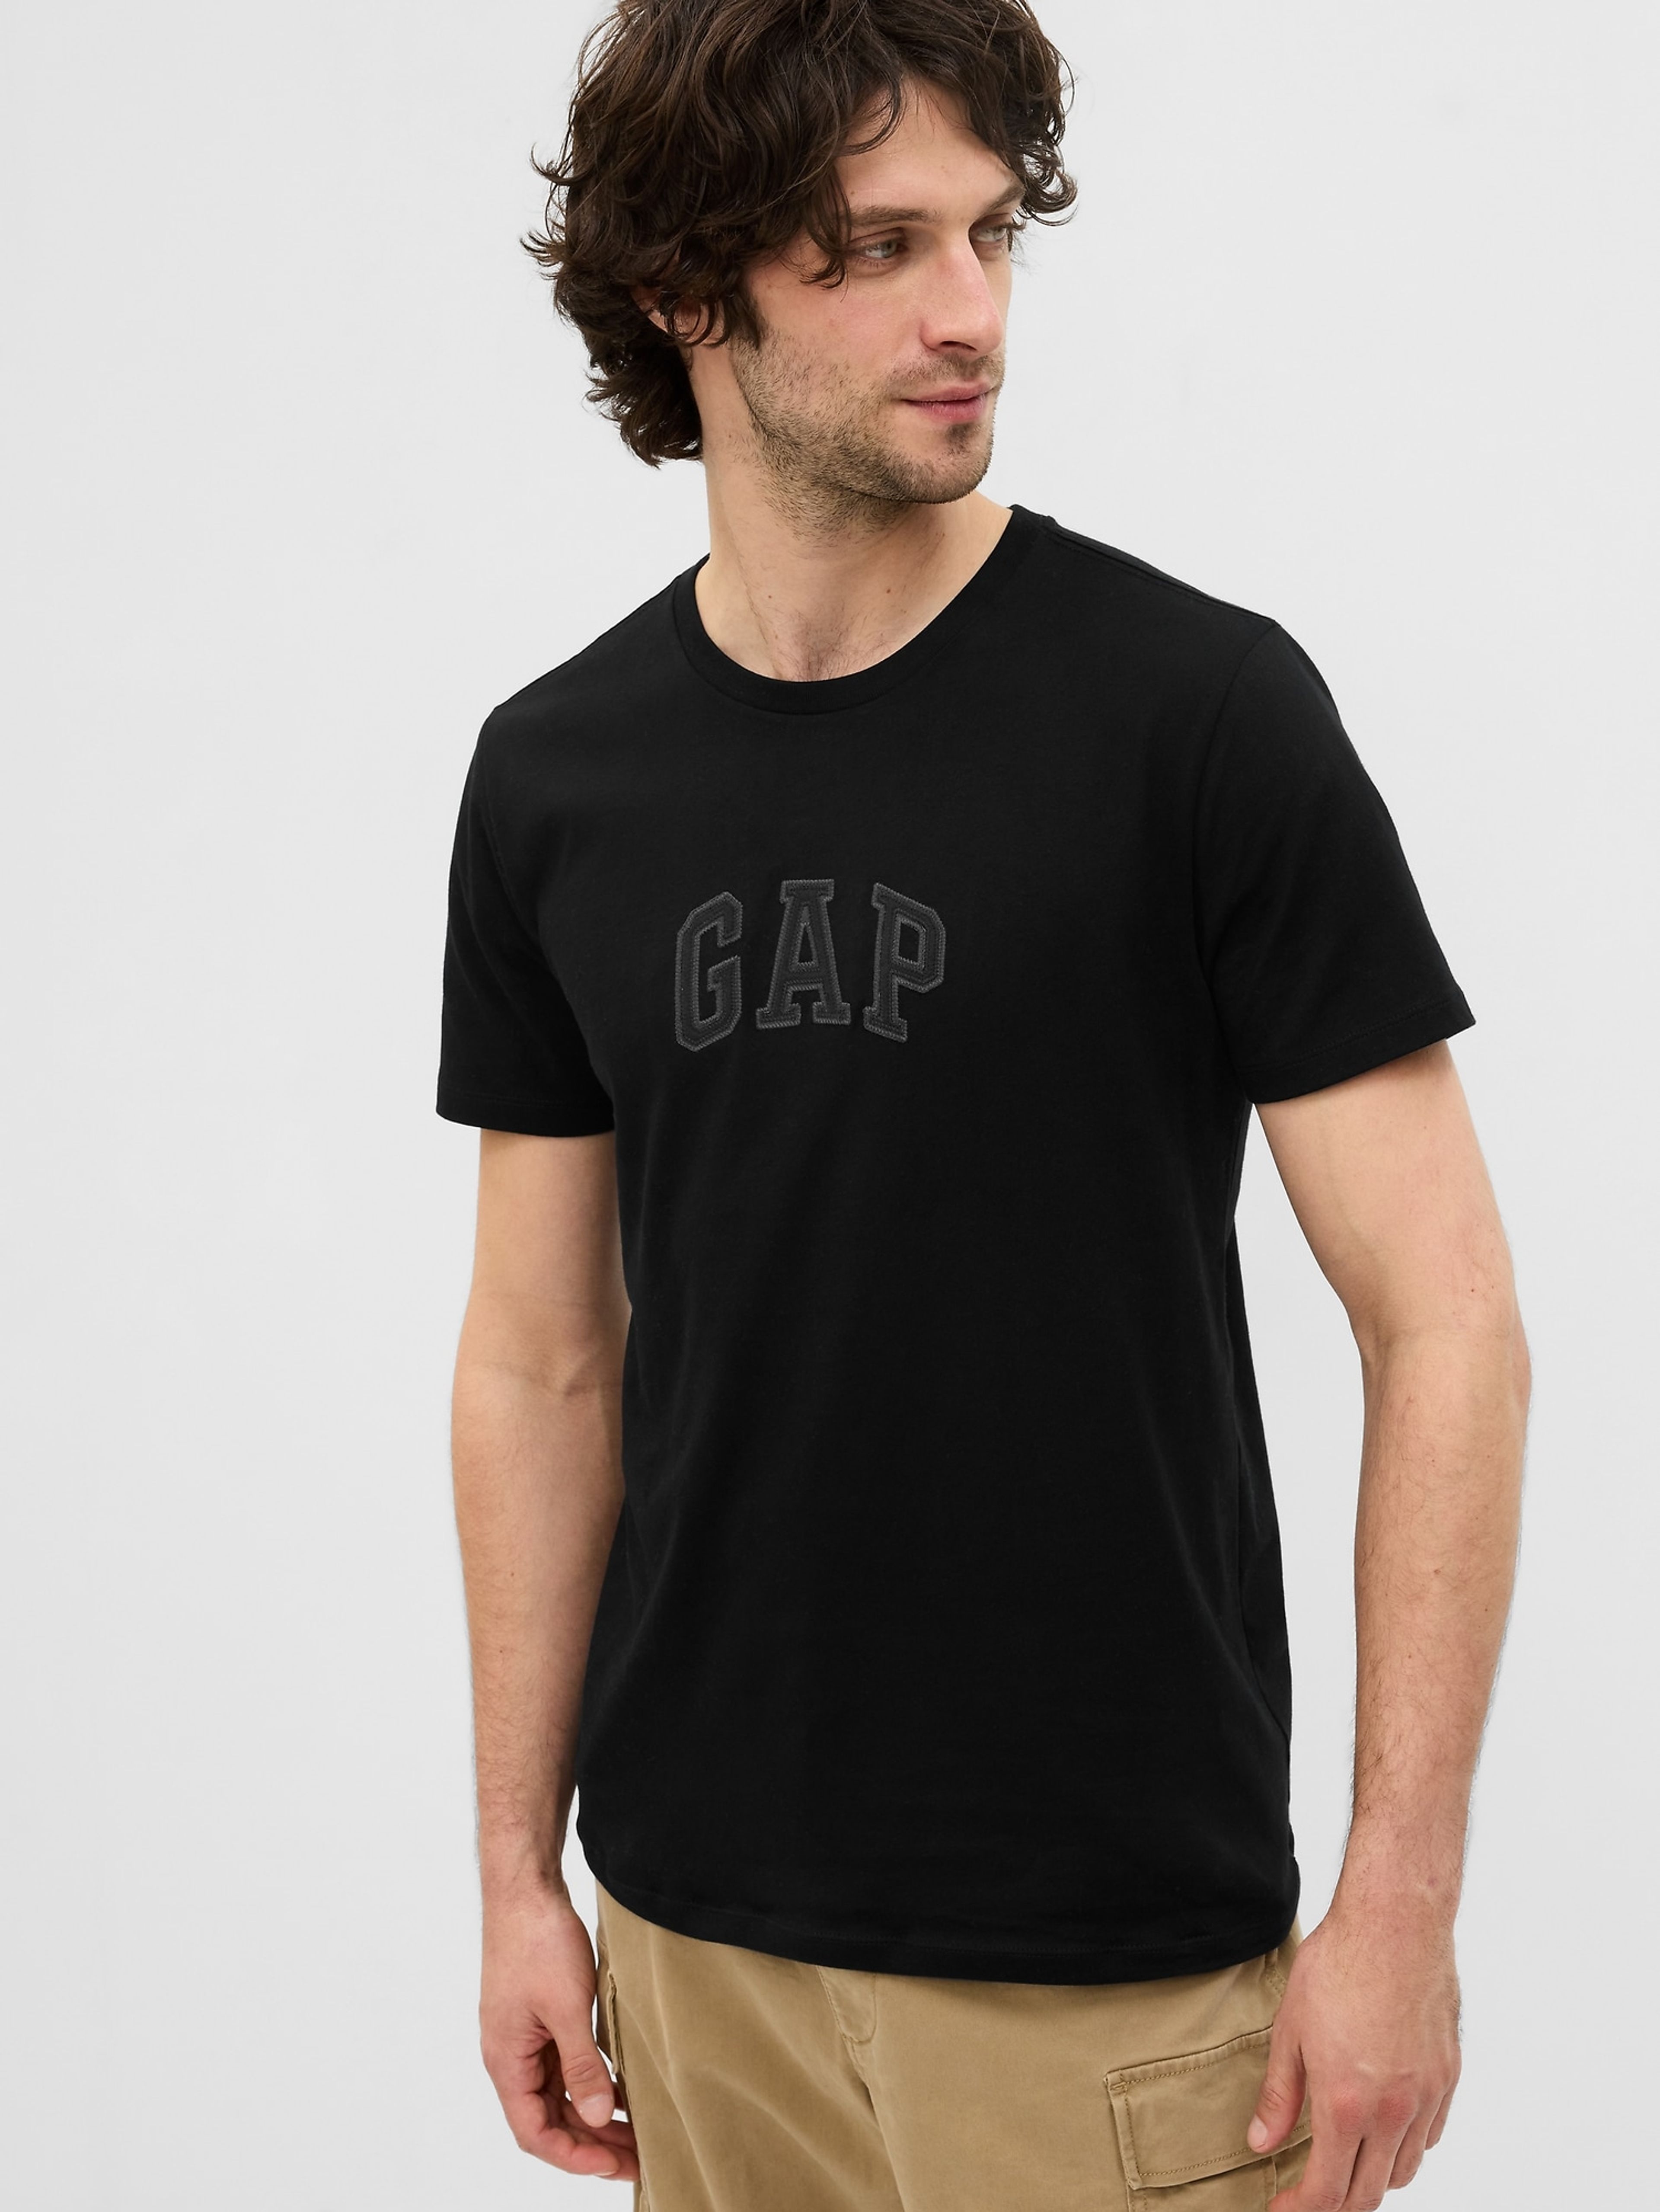 Tričko s logem GAP